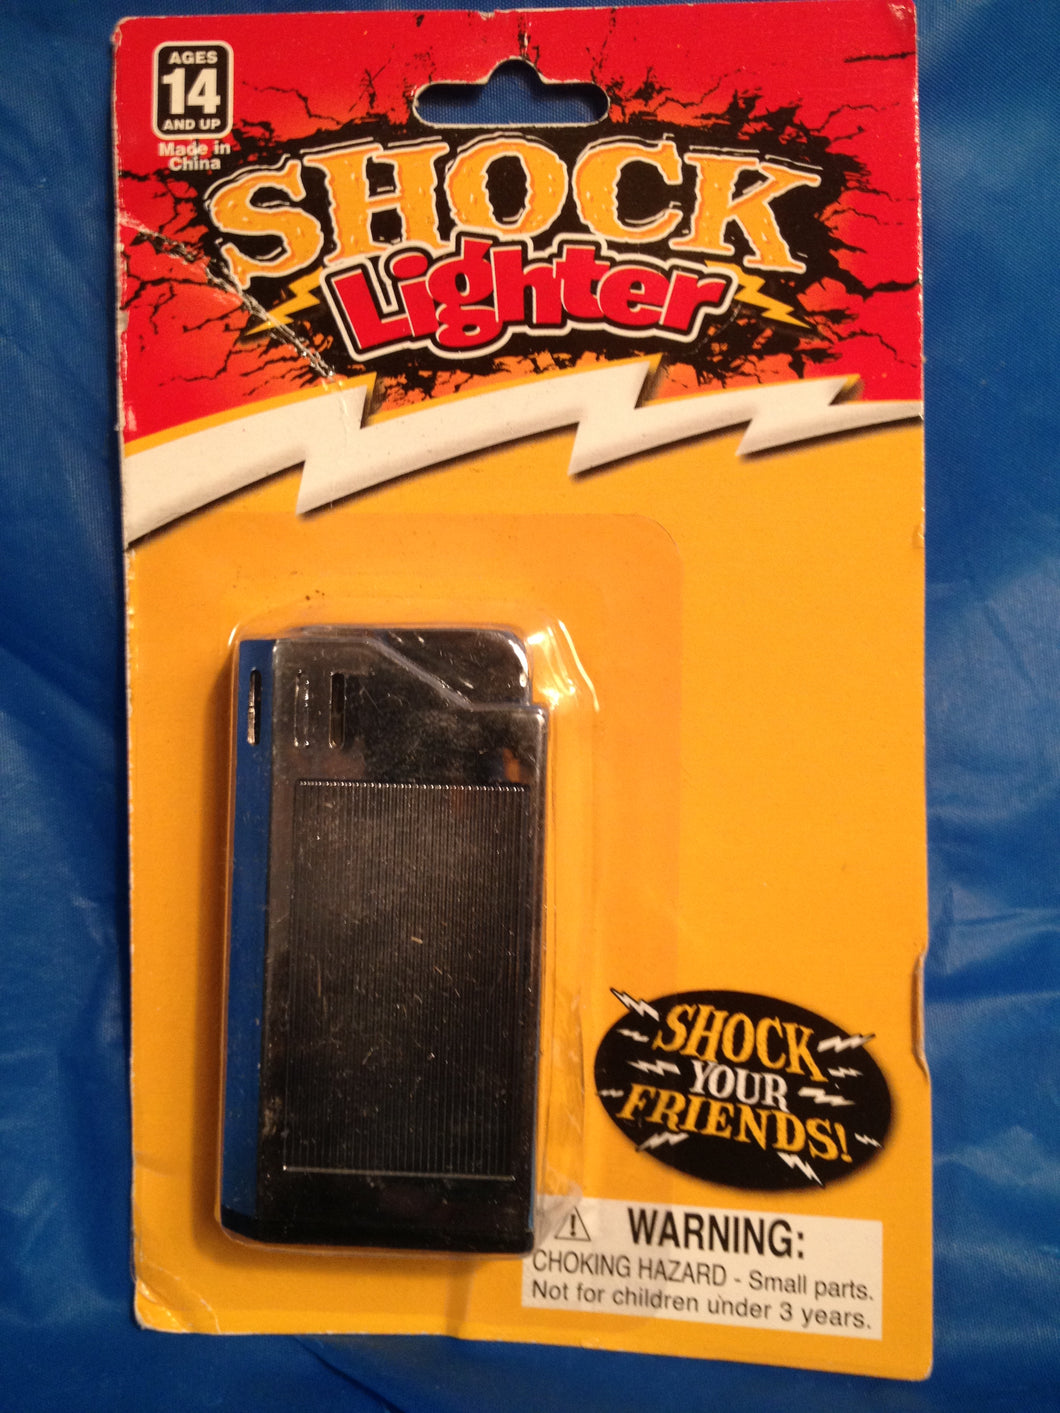 Shock Lighter - Jokes, Gags and Pranks - Shock Lighter is Very Shocking!